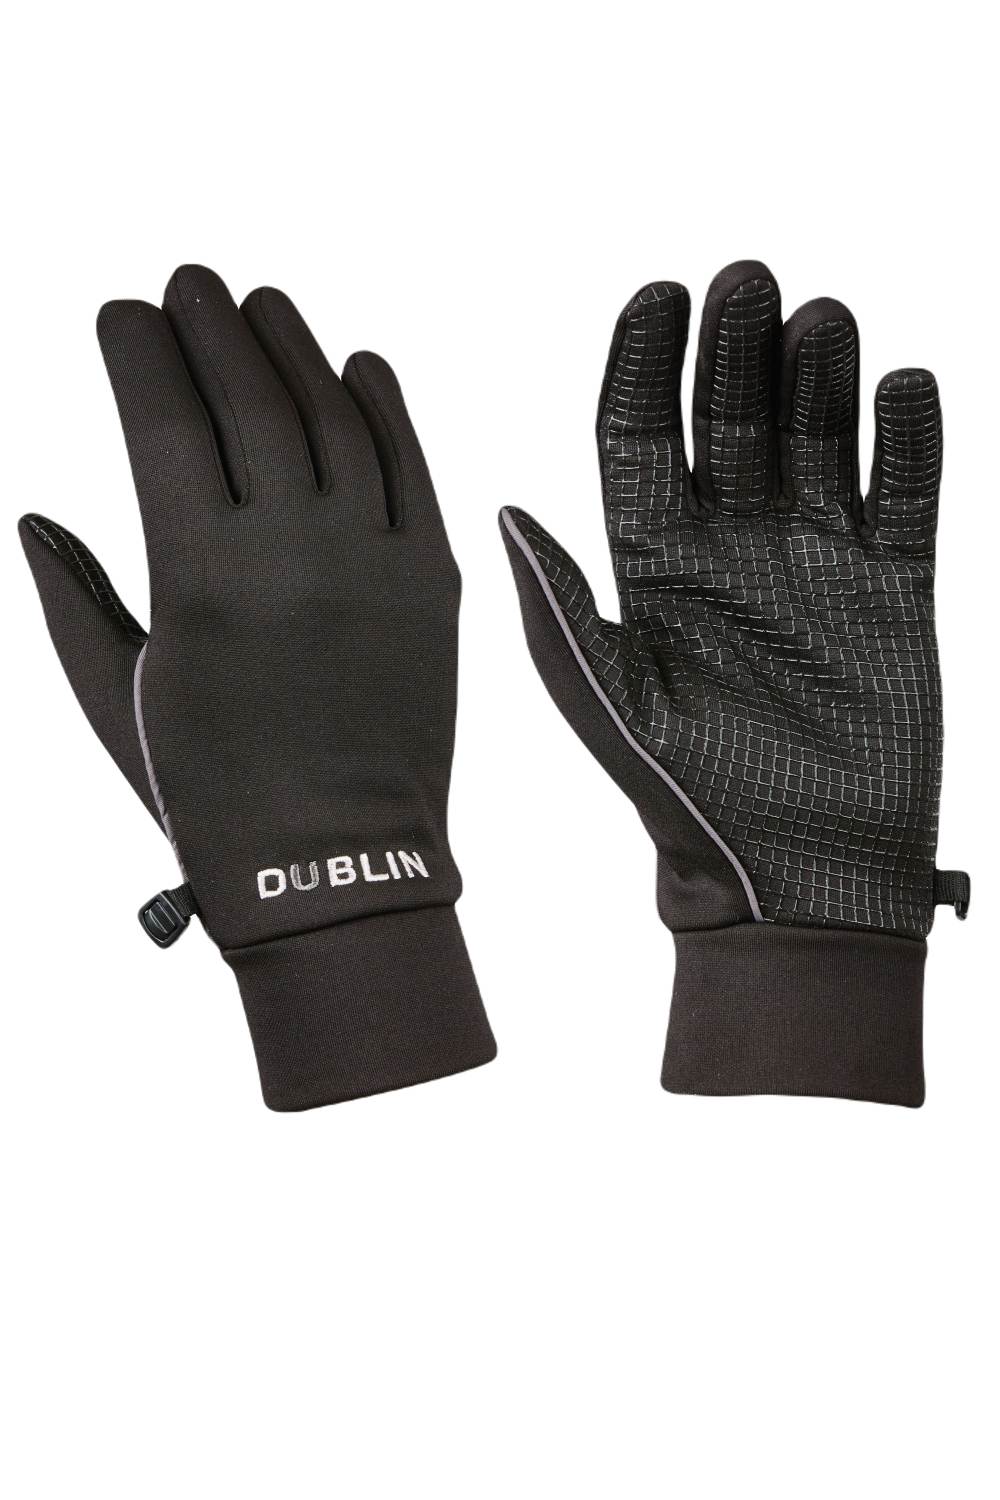 Dublin Thermal Riding Gloves In Black